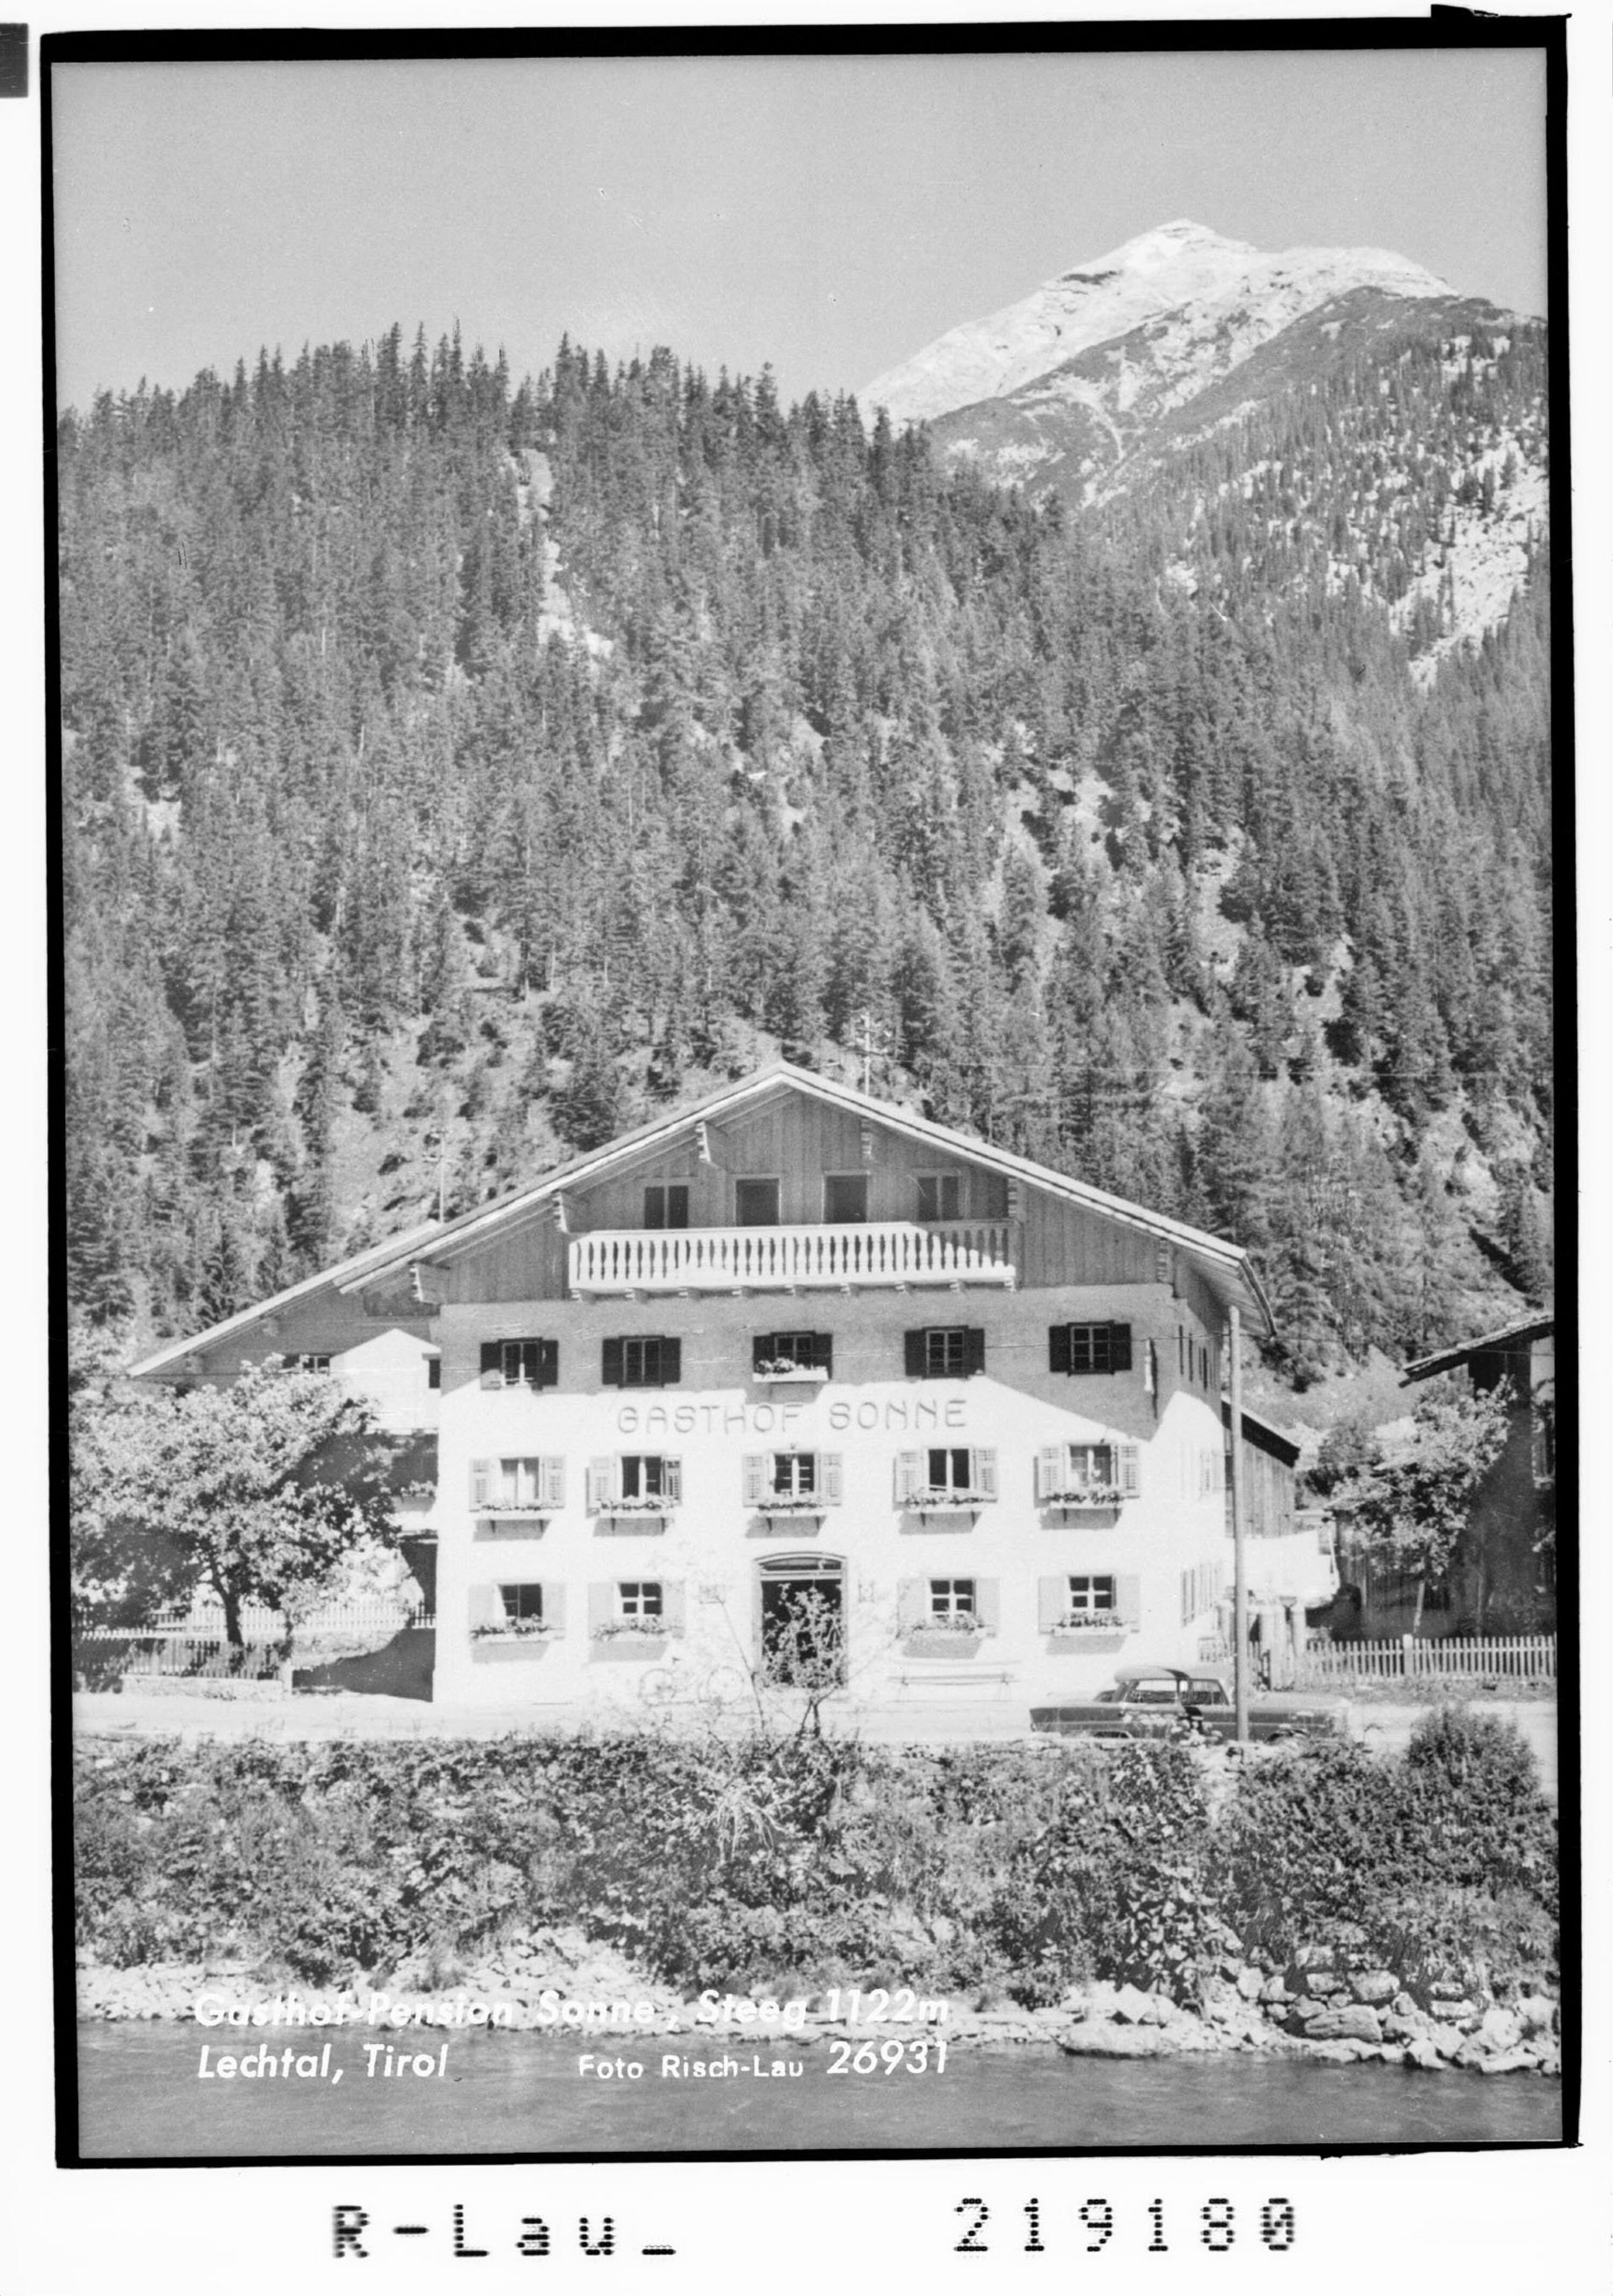 Gasthof Pension Sonne, Steeg 1122 m Lechtal, Tirol></div>


    <hr>
    <div class=